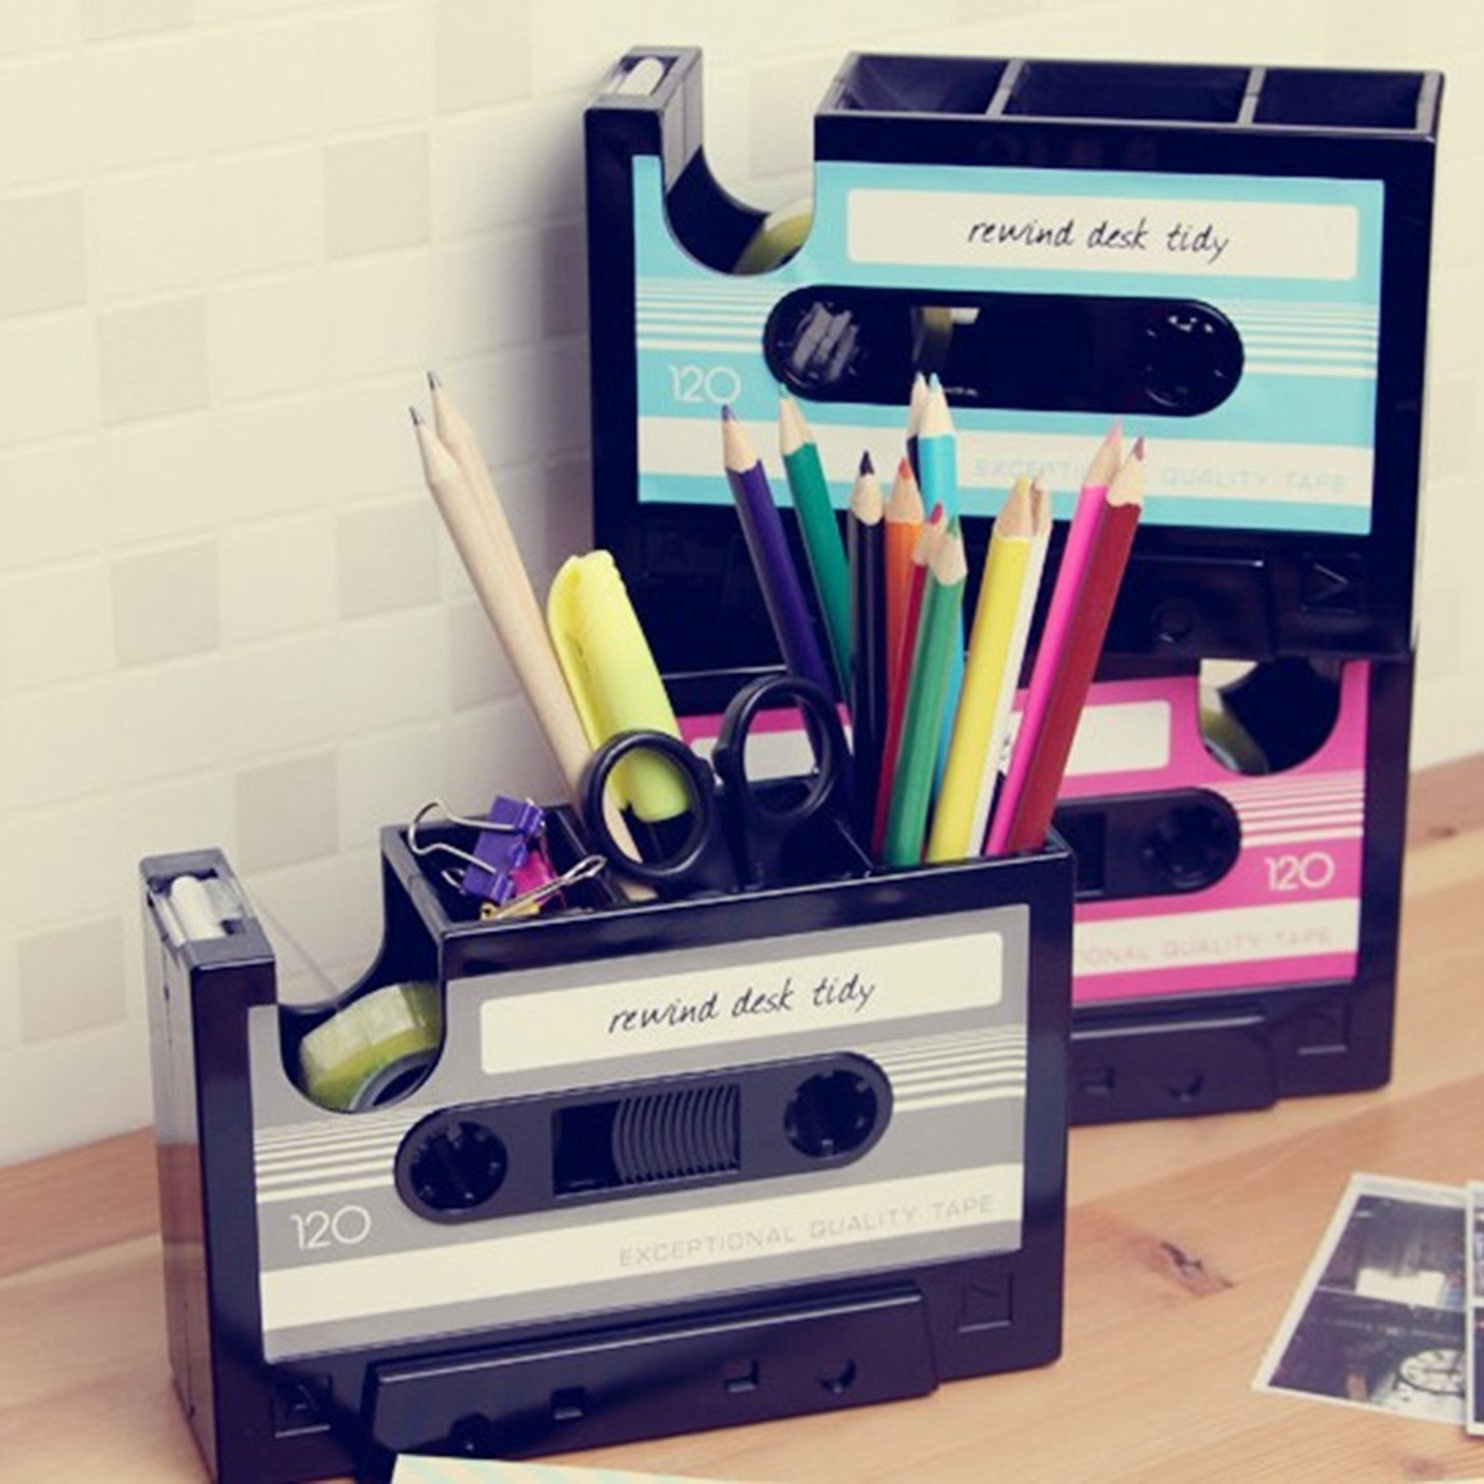 Cassette Tape Dispenser Pen Holder Vase Pencil Pot Stationery Desk Tidy Container Office Stationery Supplier Gift(black)